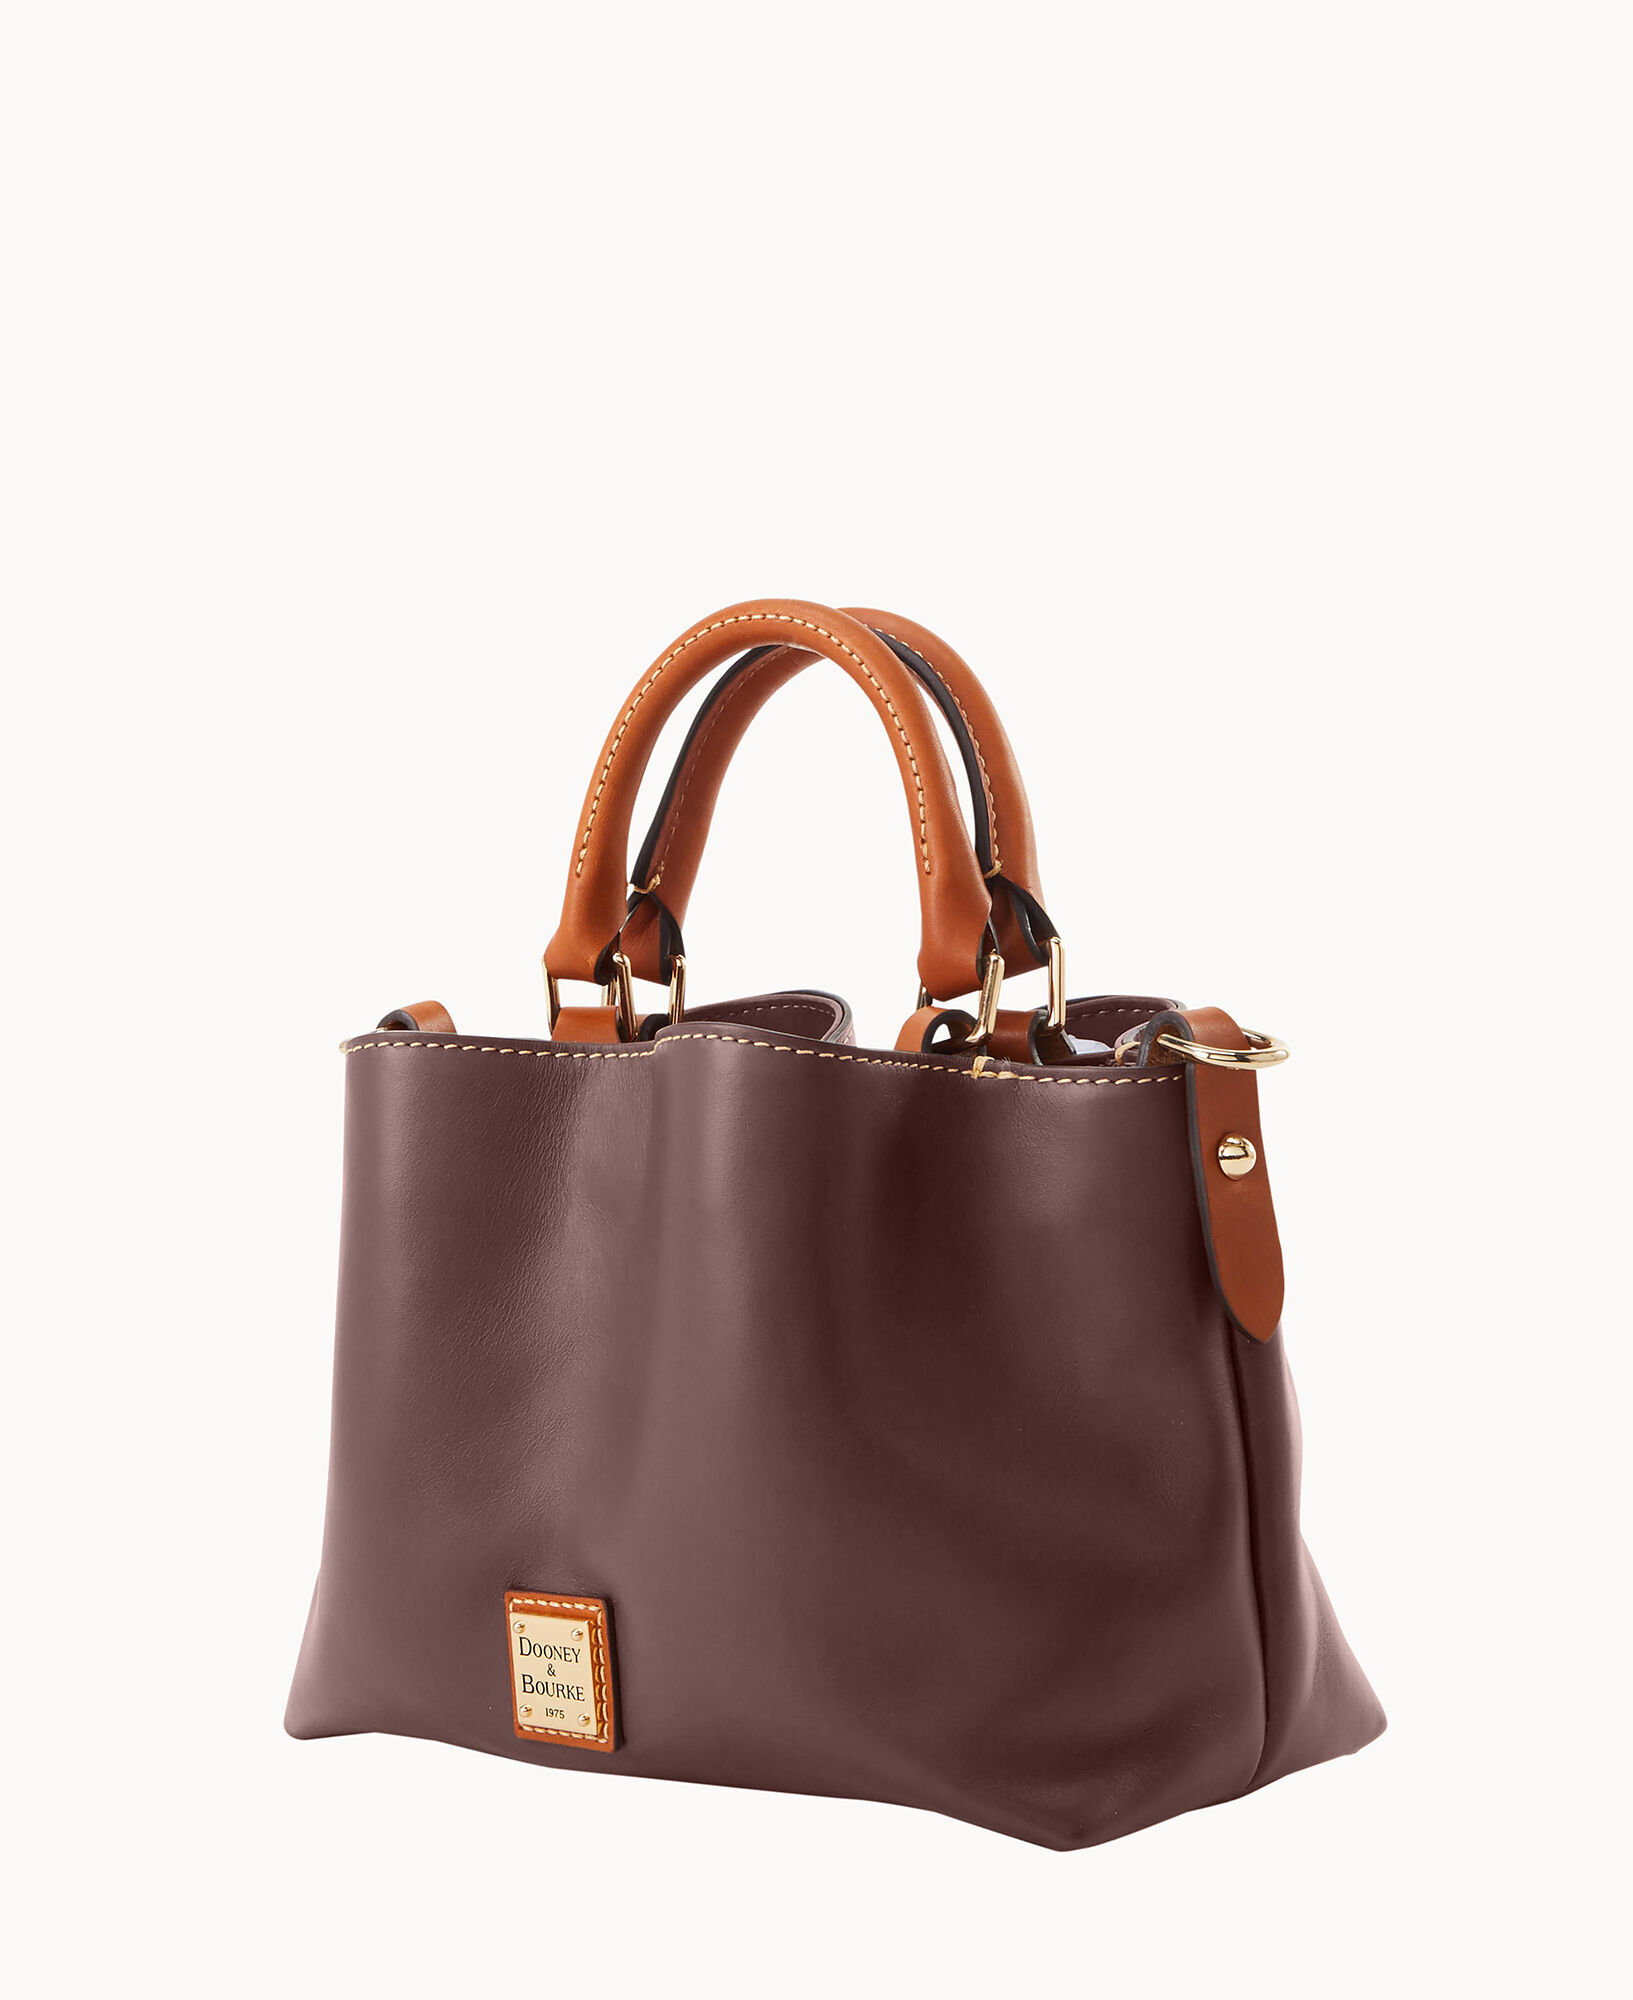 Colorful Dooney & Bourke handbag, Discontinued Style!